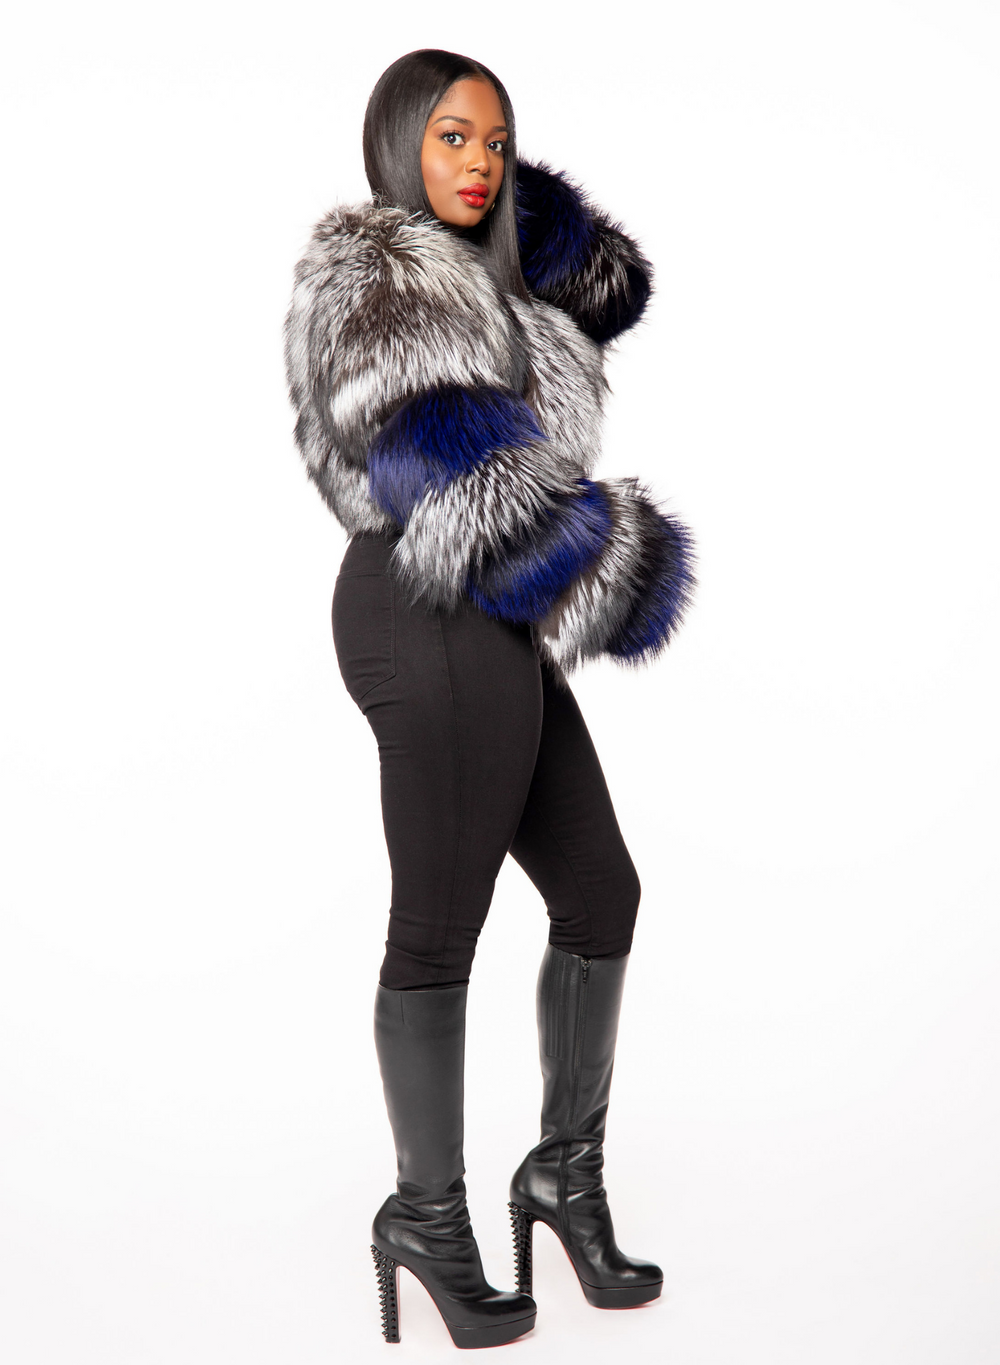 – The Bolero Silver Fox Success Fur Fancy Candice